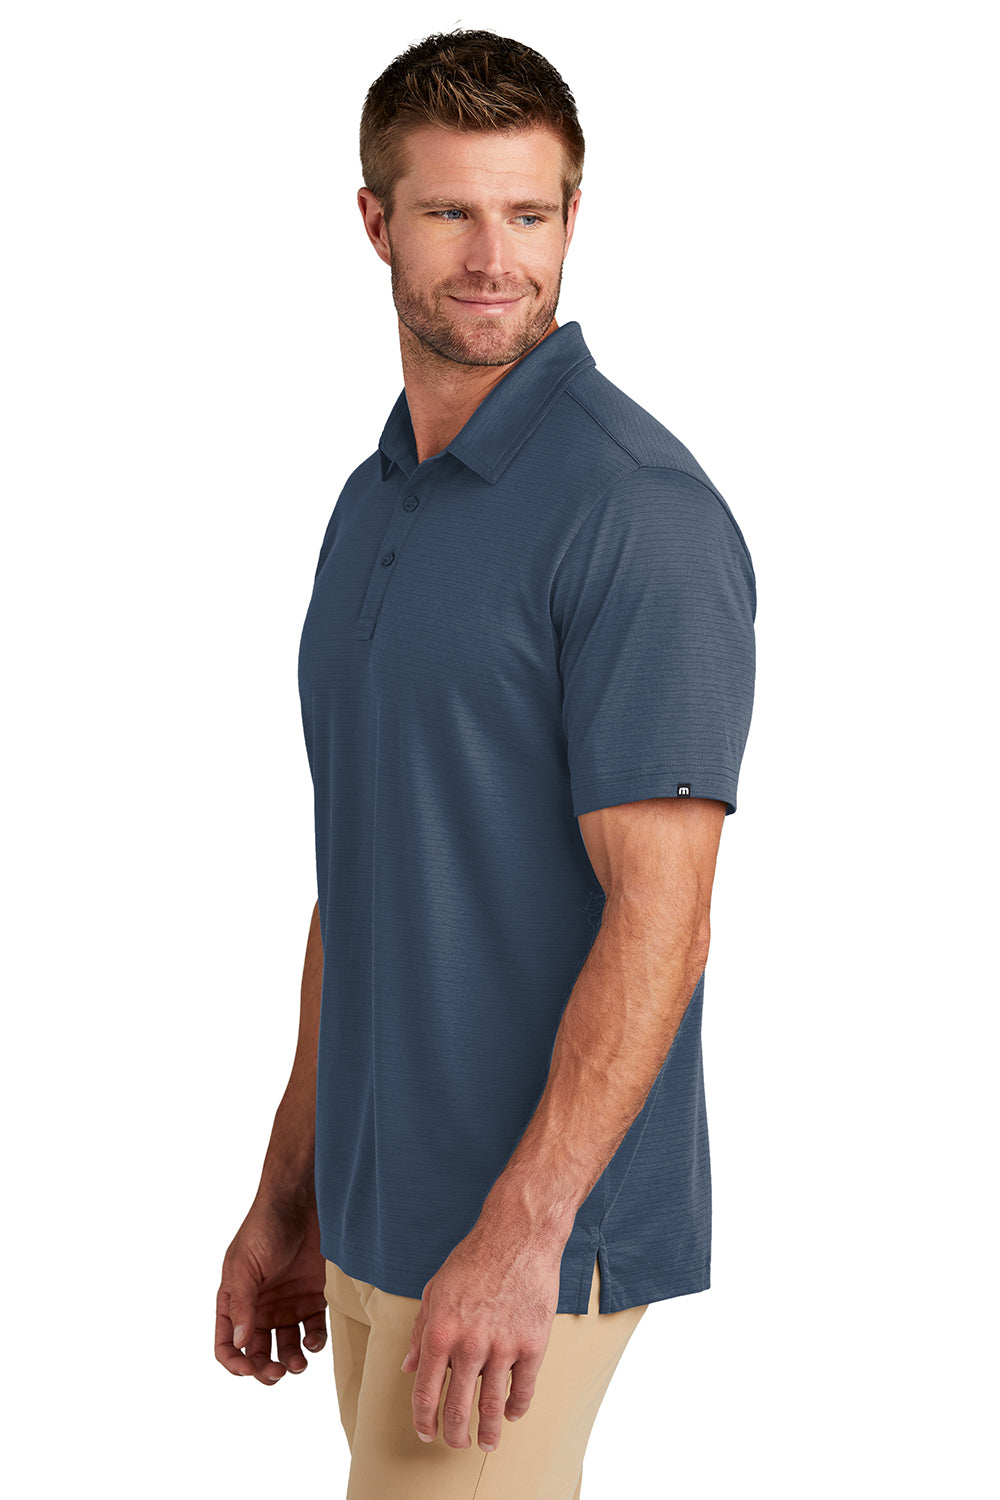 TravisMathew TM1MY399 Mens Bayfront Moisture Wicking Short Sleeve Polo Shirt Insignia Blue Model Side